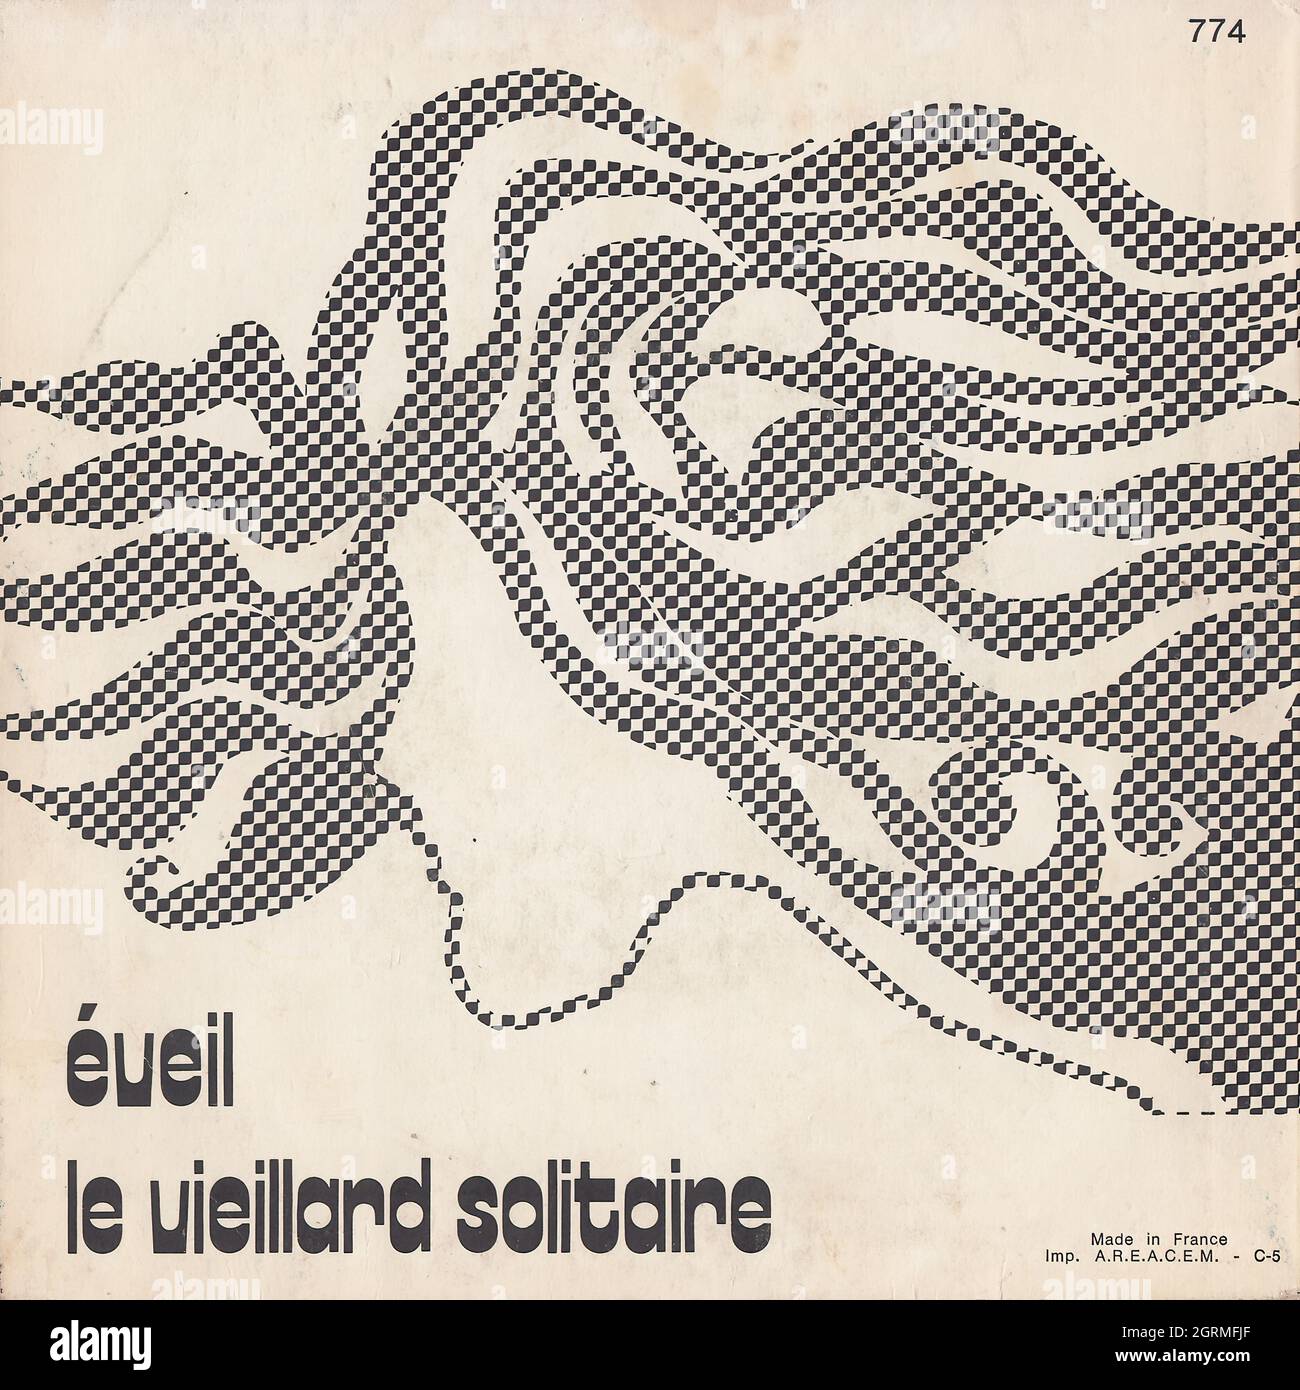 Abramose - Le vieillard solitaire - Eveil (back cover) 45rpm - Vintage Vinyl Record Cover Stock Photo